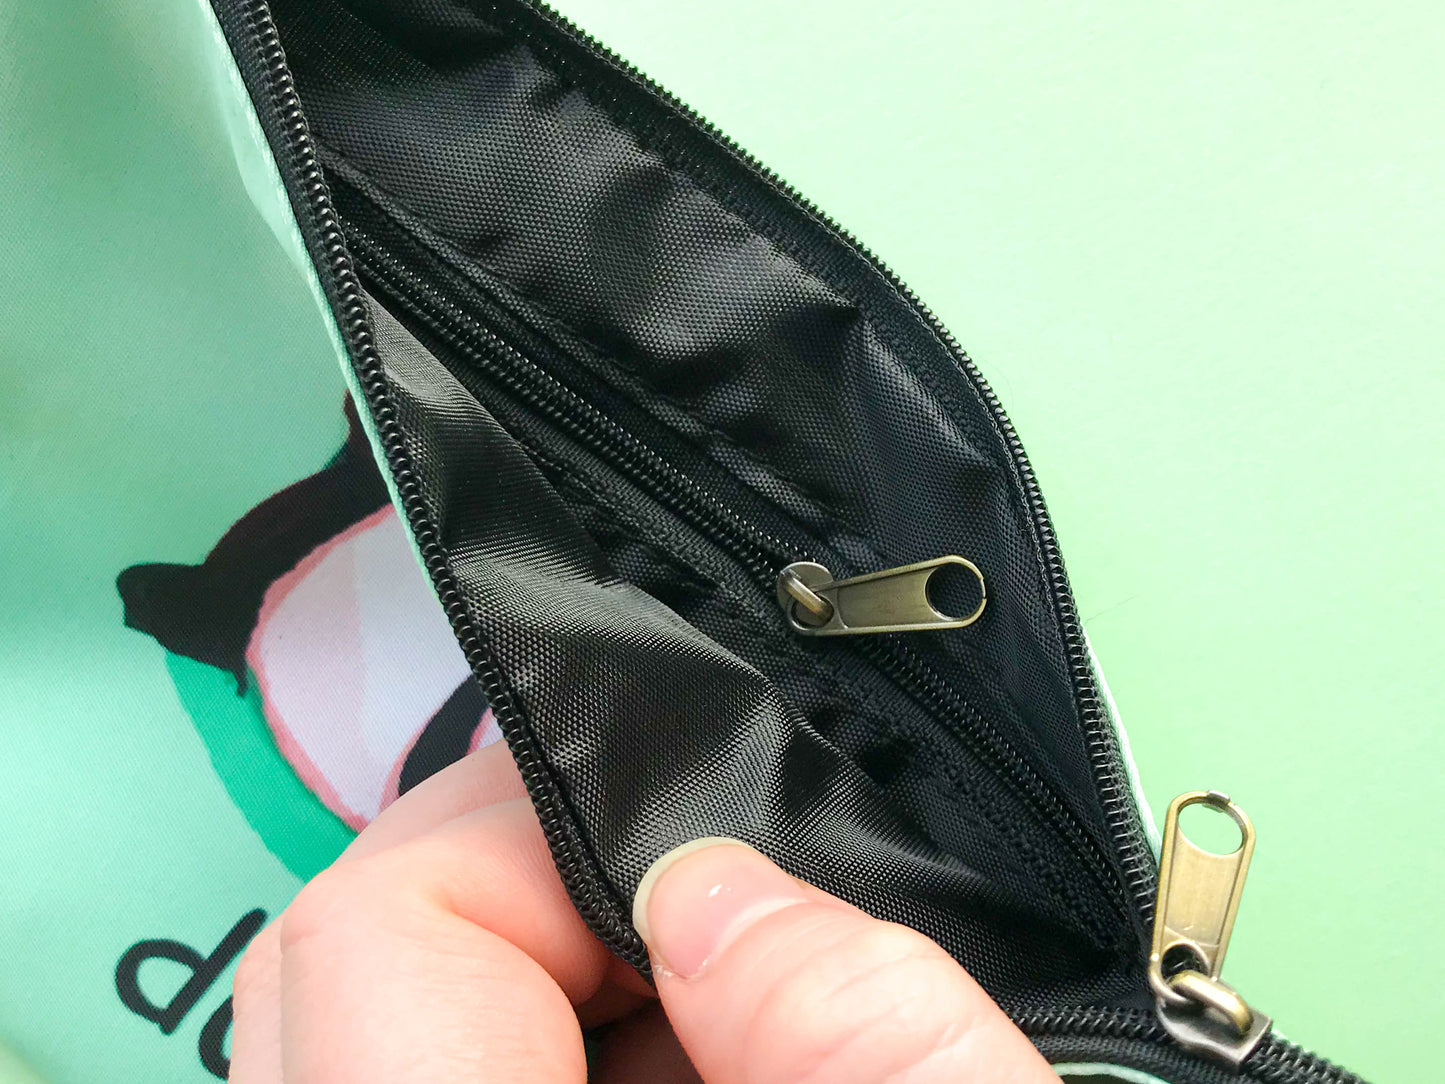 Dumb Panda Pencil Case - Zipper Bag for Cosmetics or Stationery